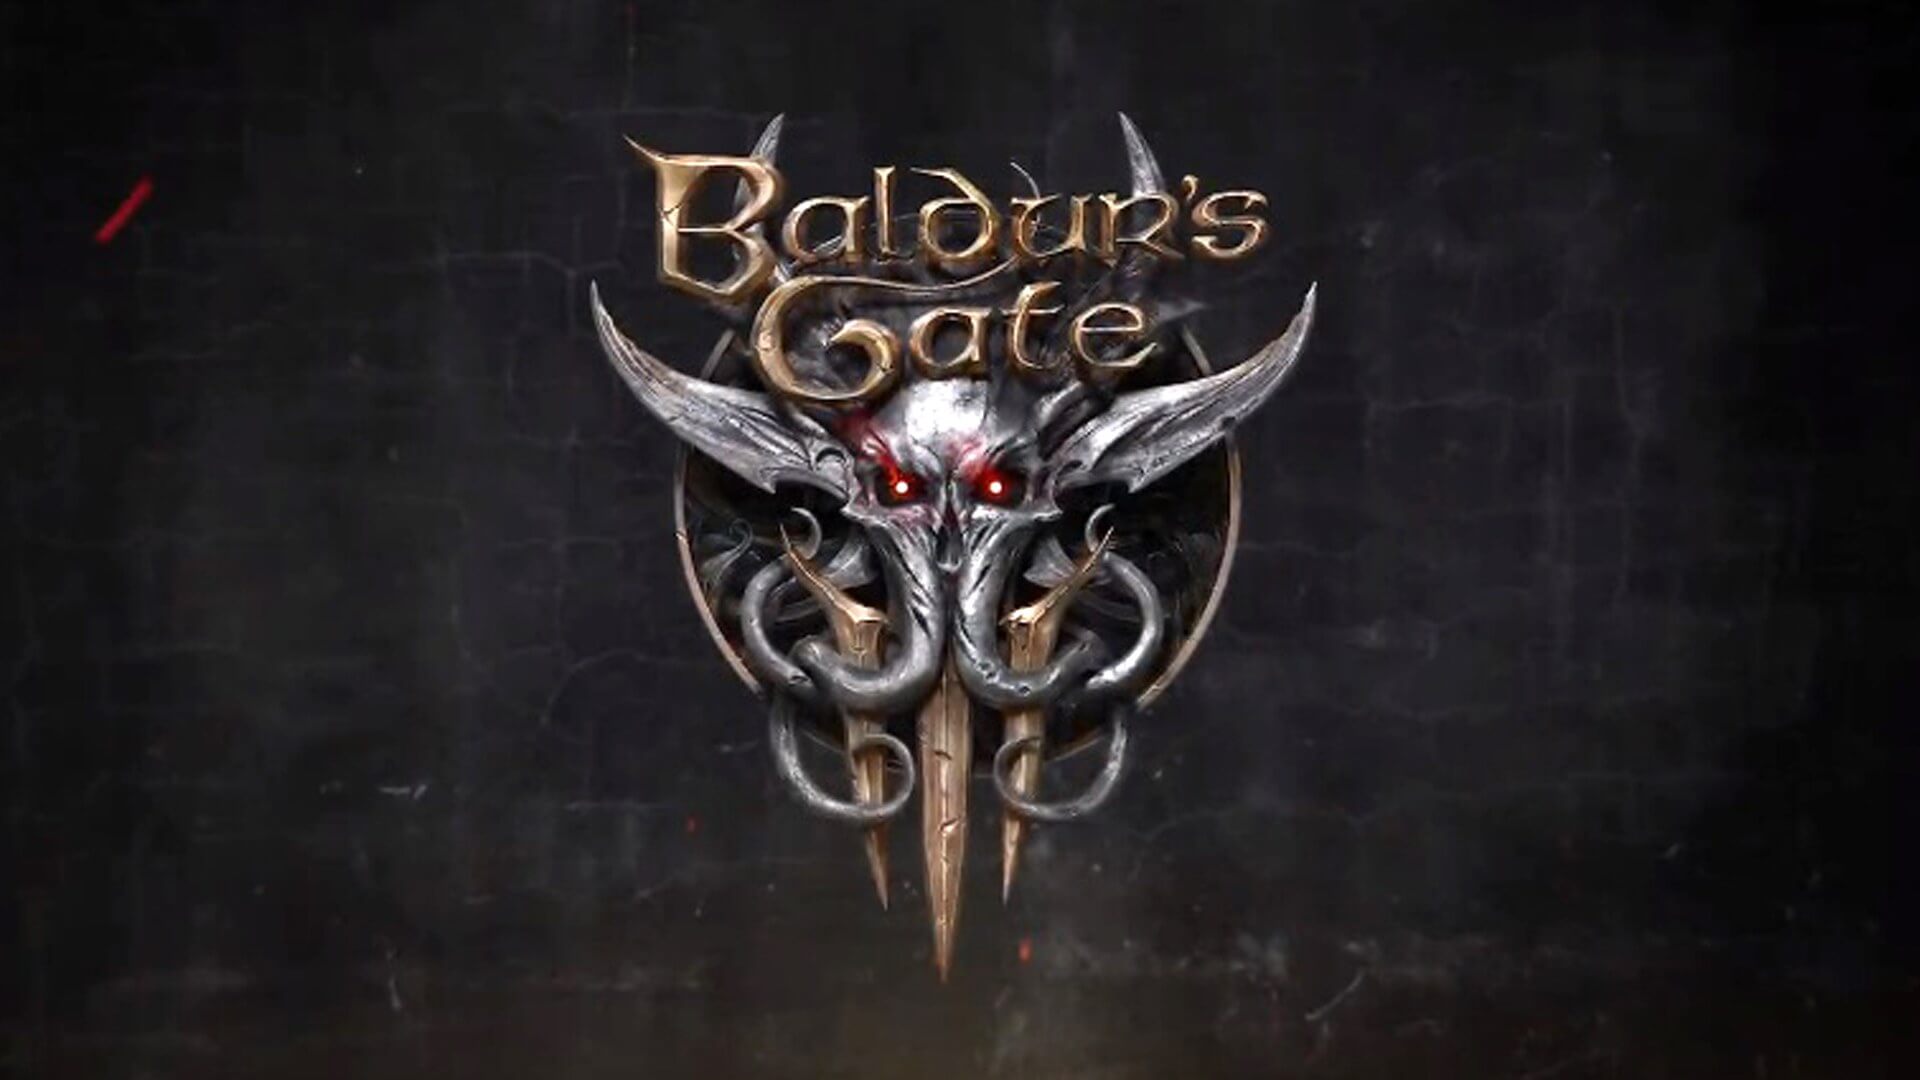 Baldur's Gate 3 update: Larian teases that something's brewing